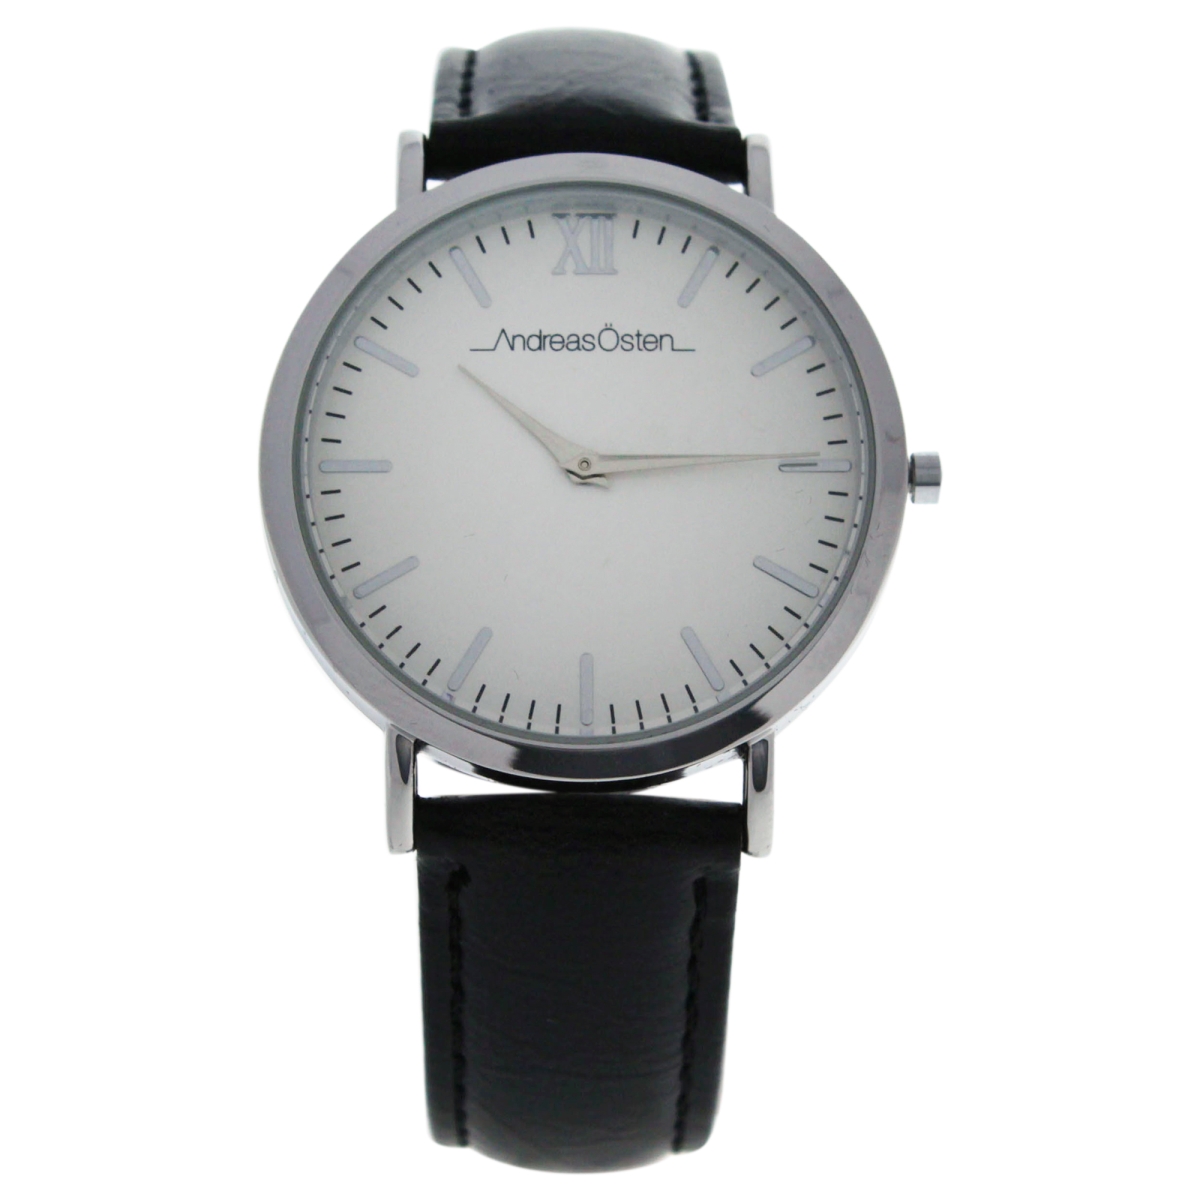 U-wat-1046 Silver & Black Leather Strap Watch For Unisex, Ao-01